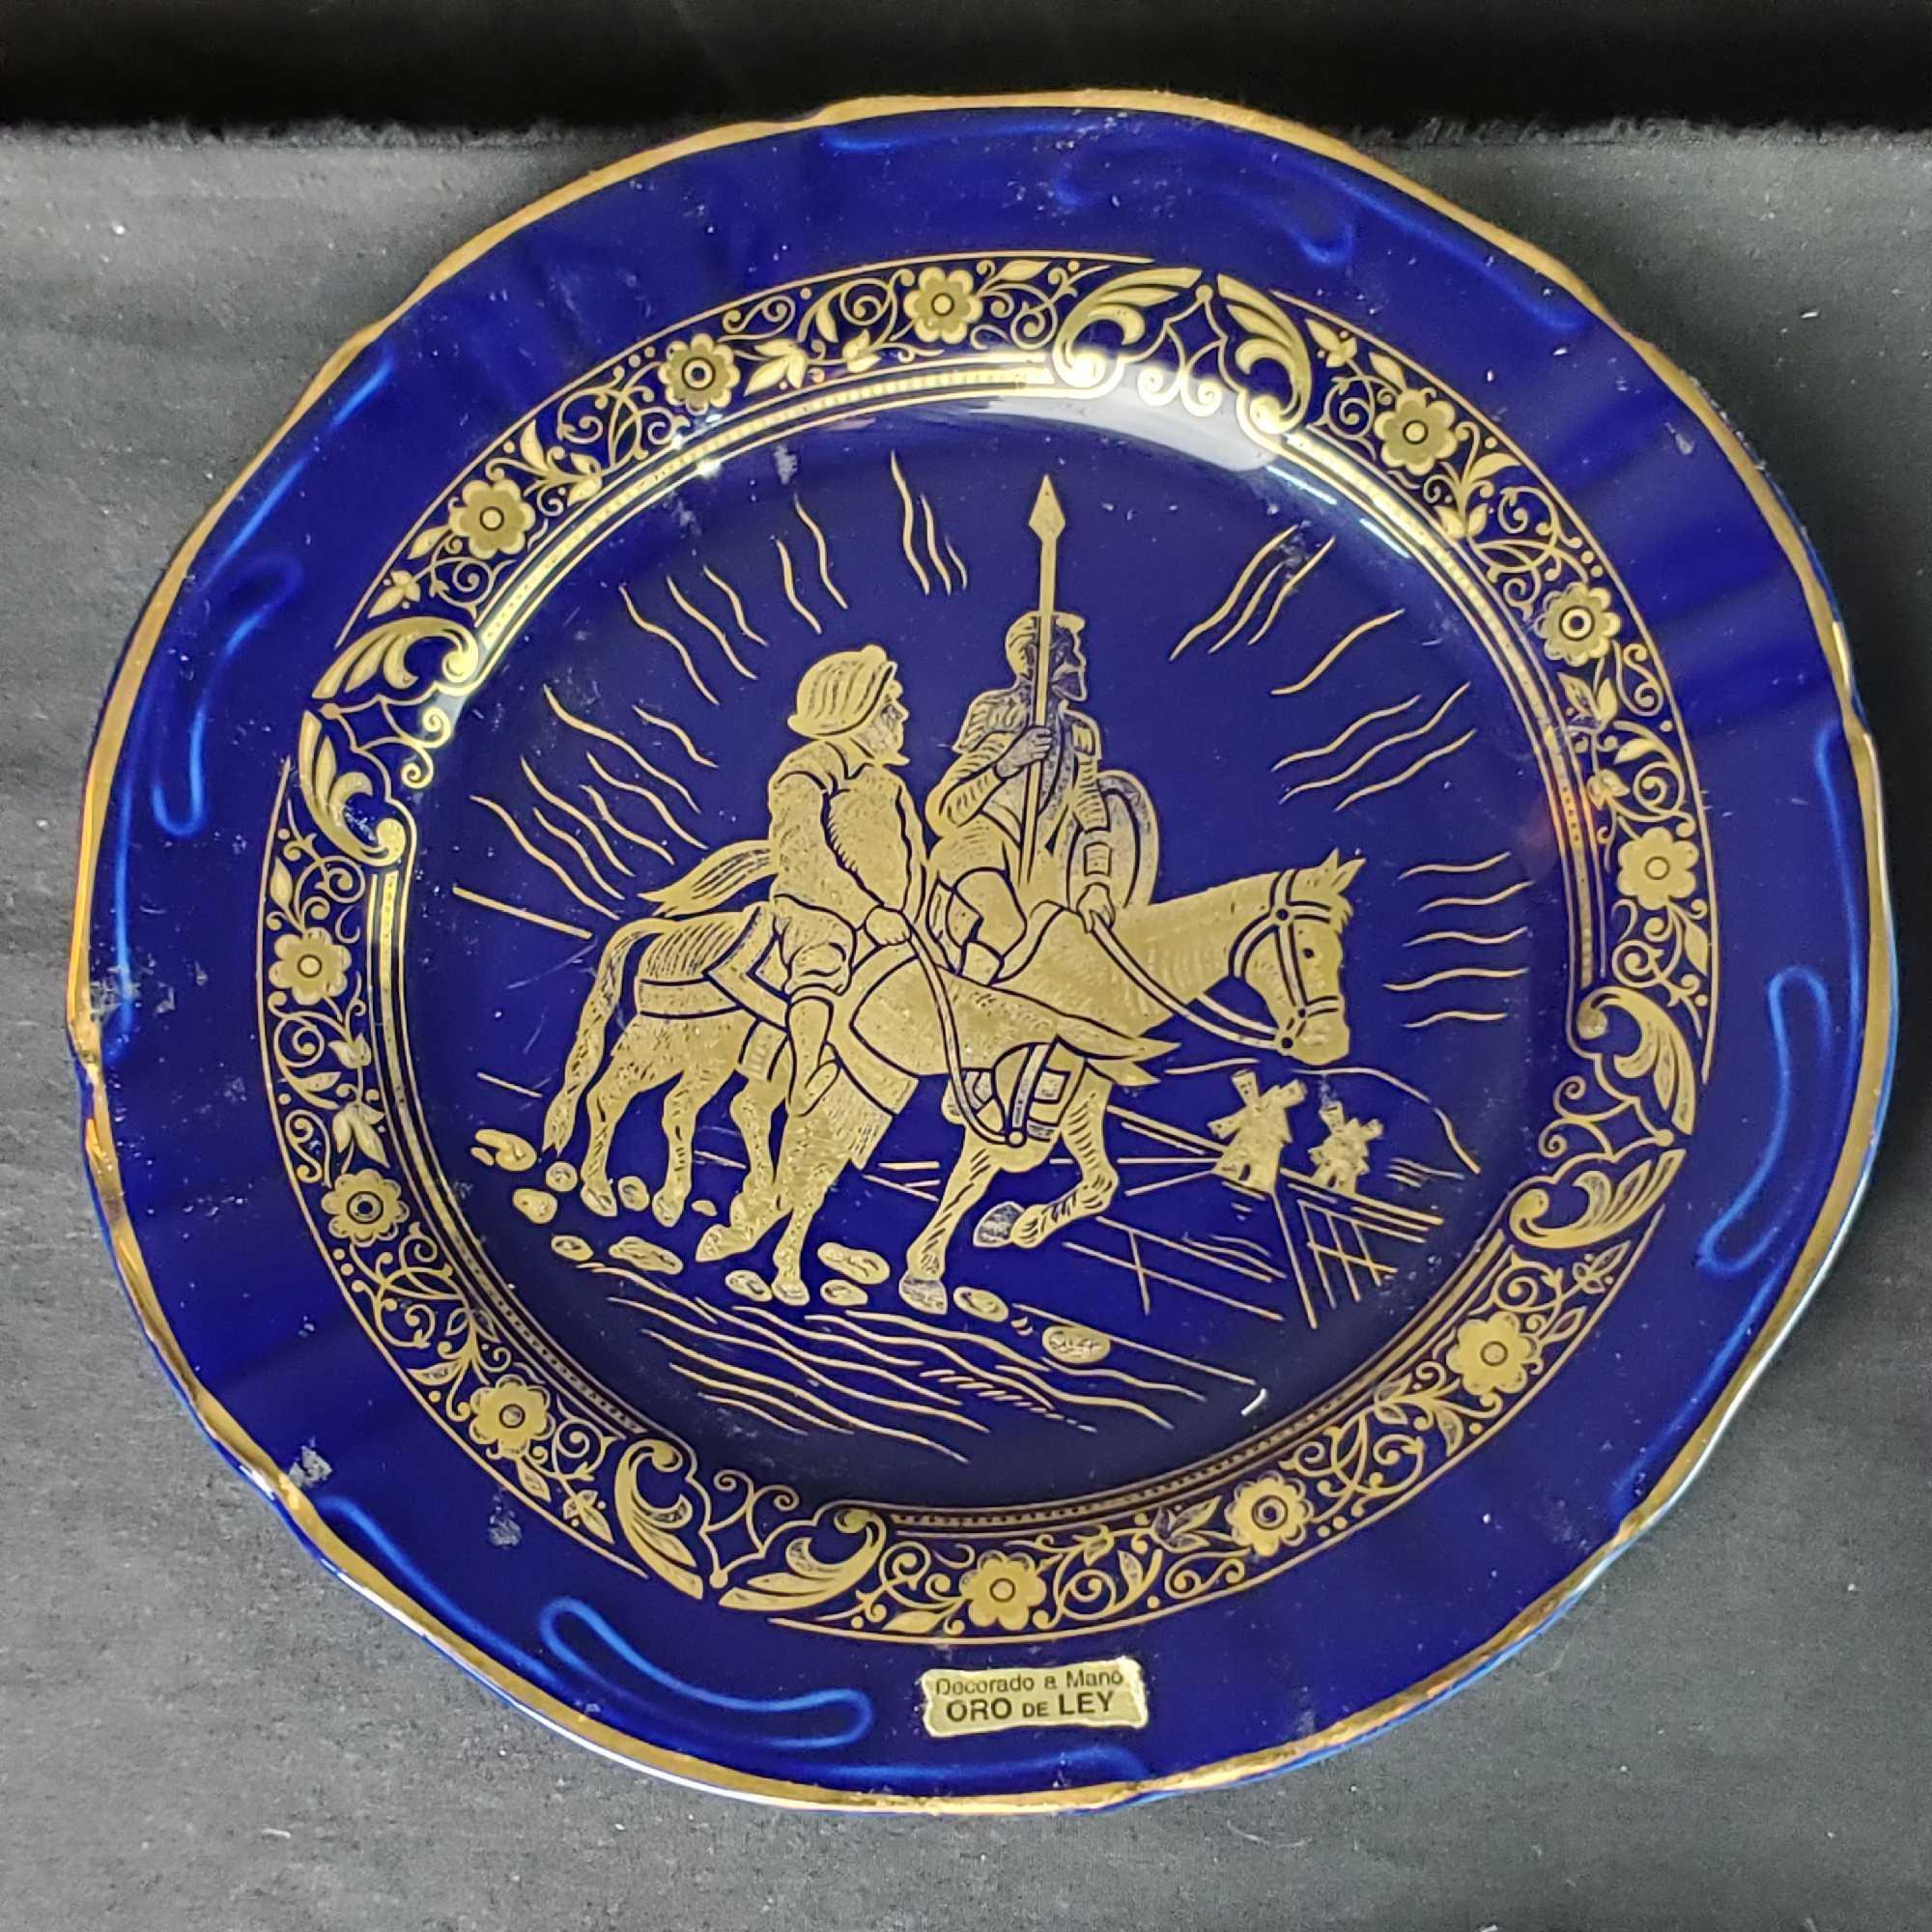 8 decorative plates Praha Jerusalem Italy etc. some hand painted